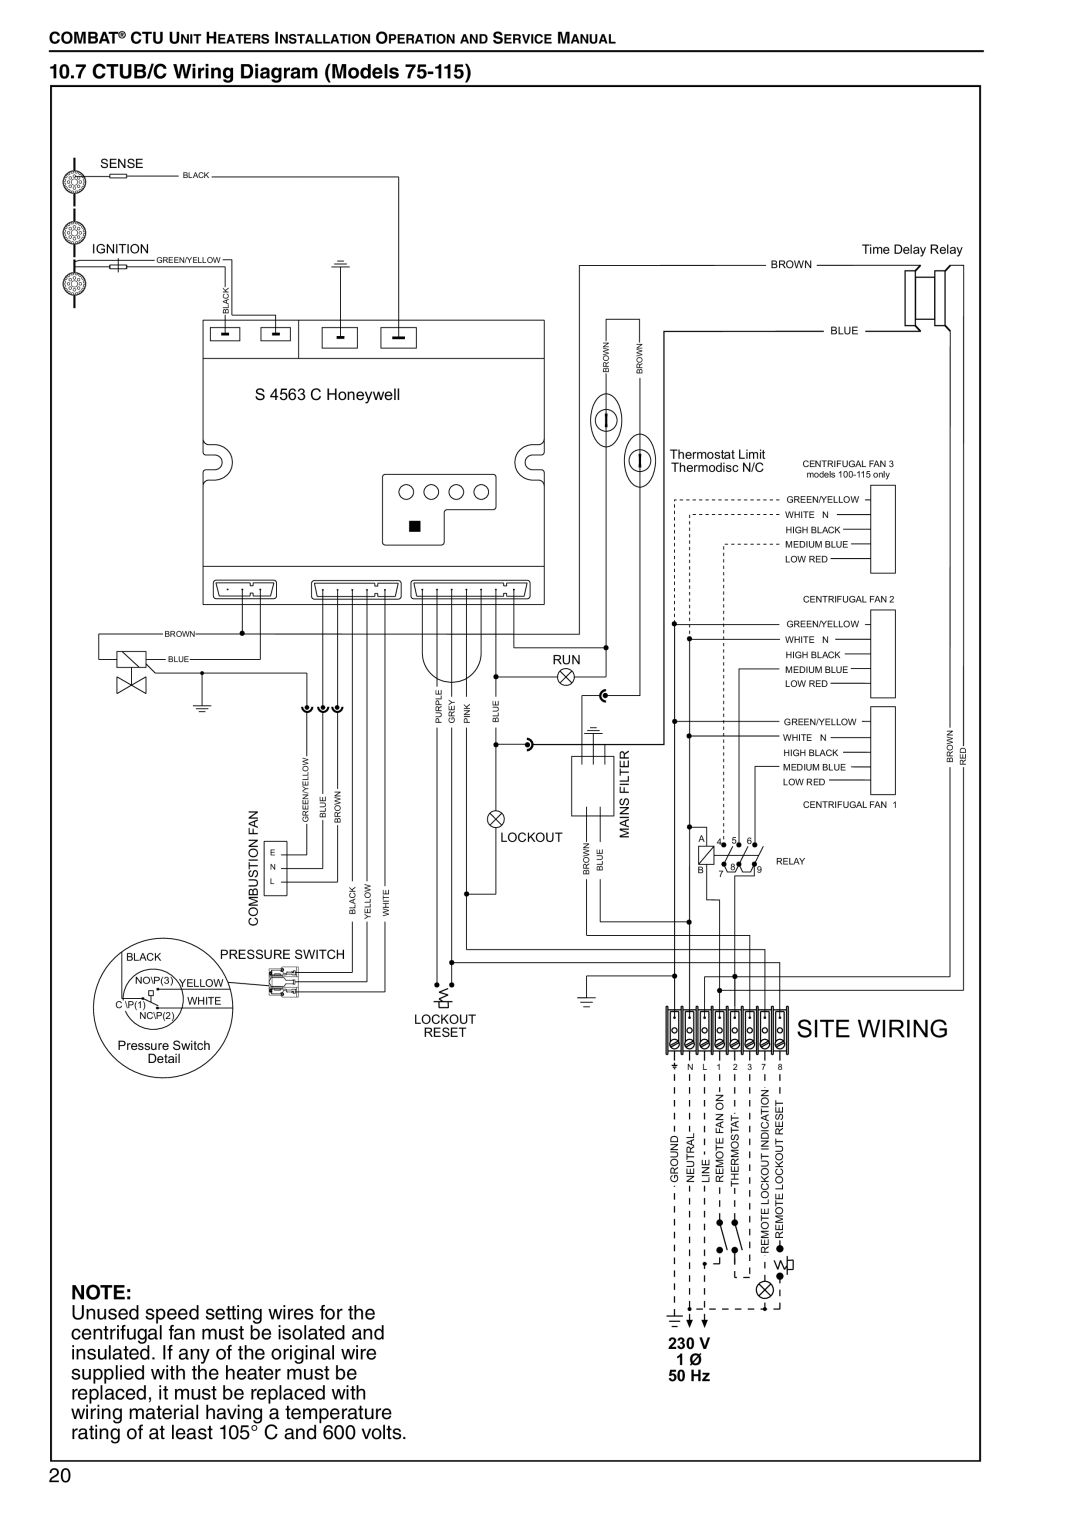 Roberts Gorden CTU 22 TO 115 service manual CTUB/C Wiring Diagram Models, Site Wiring 